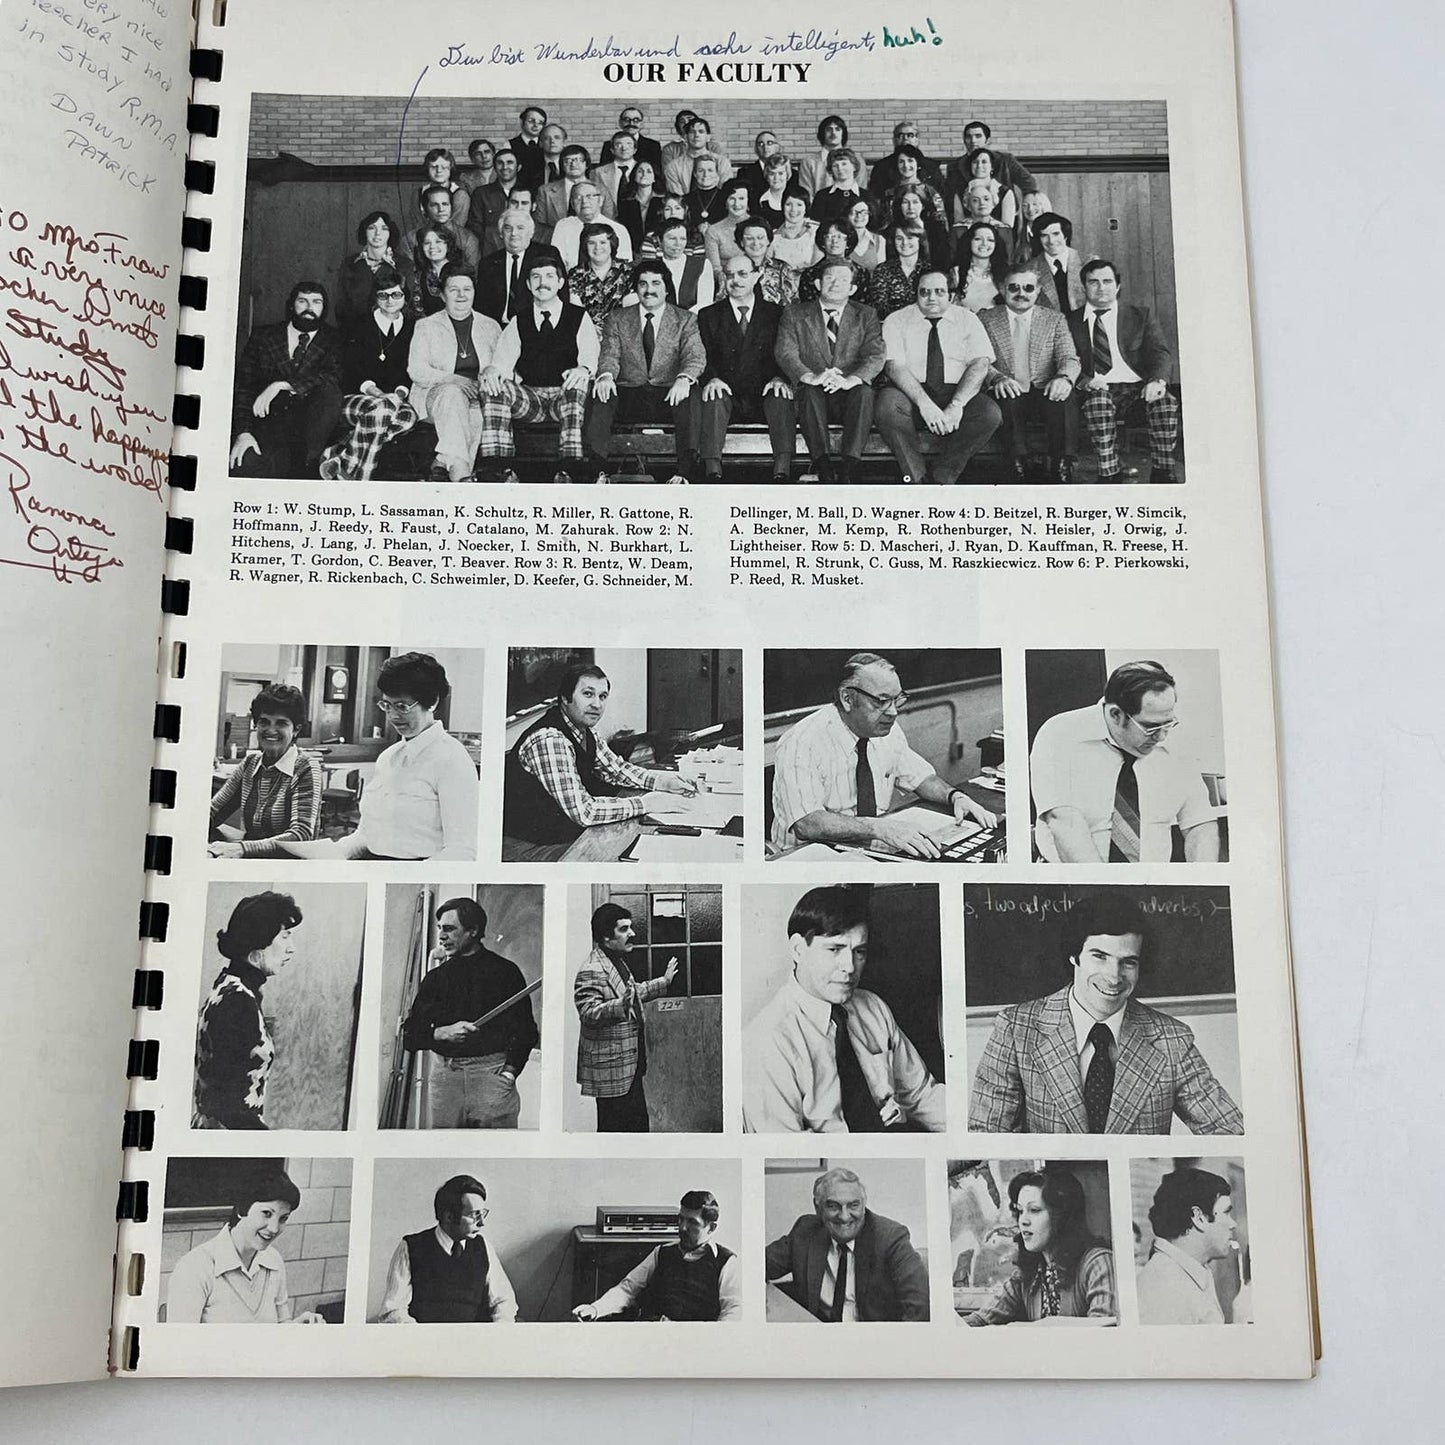 1977 Northwest Junior High School Yearbook Reading PA TG2